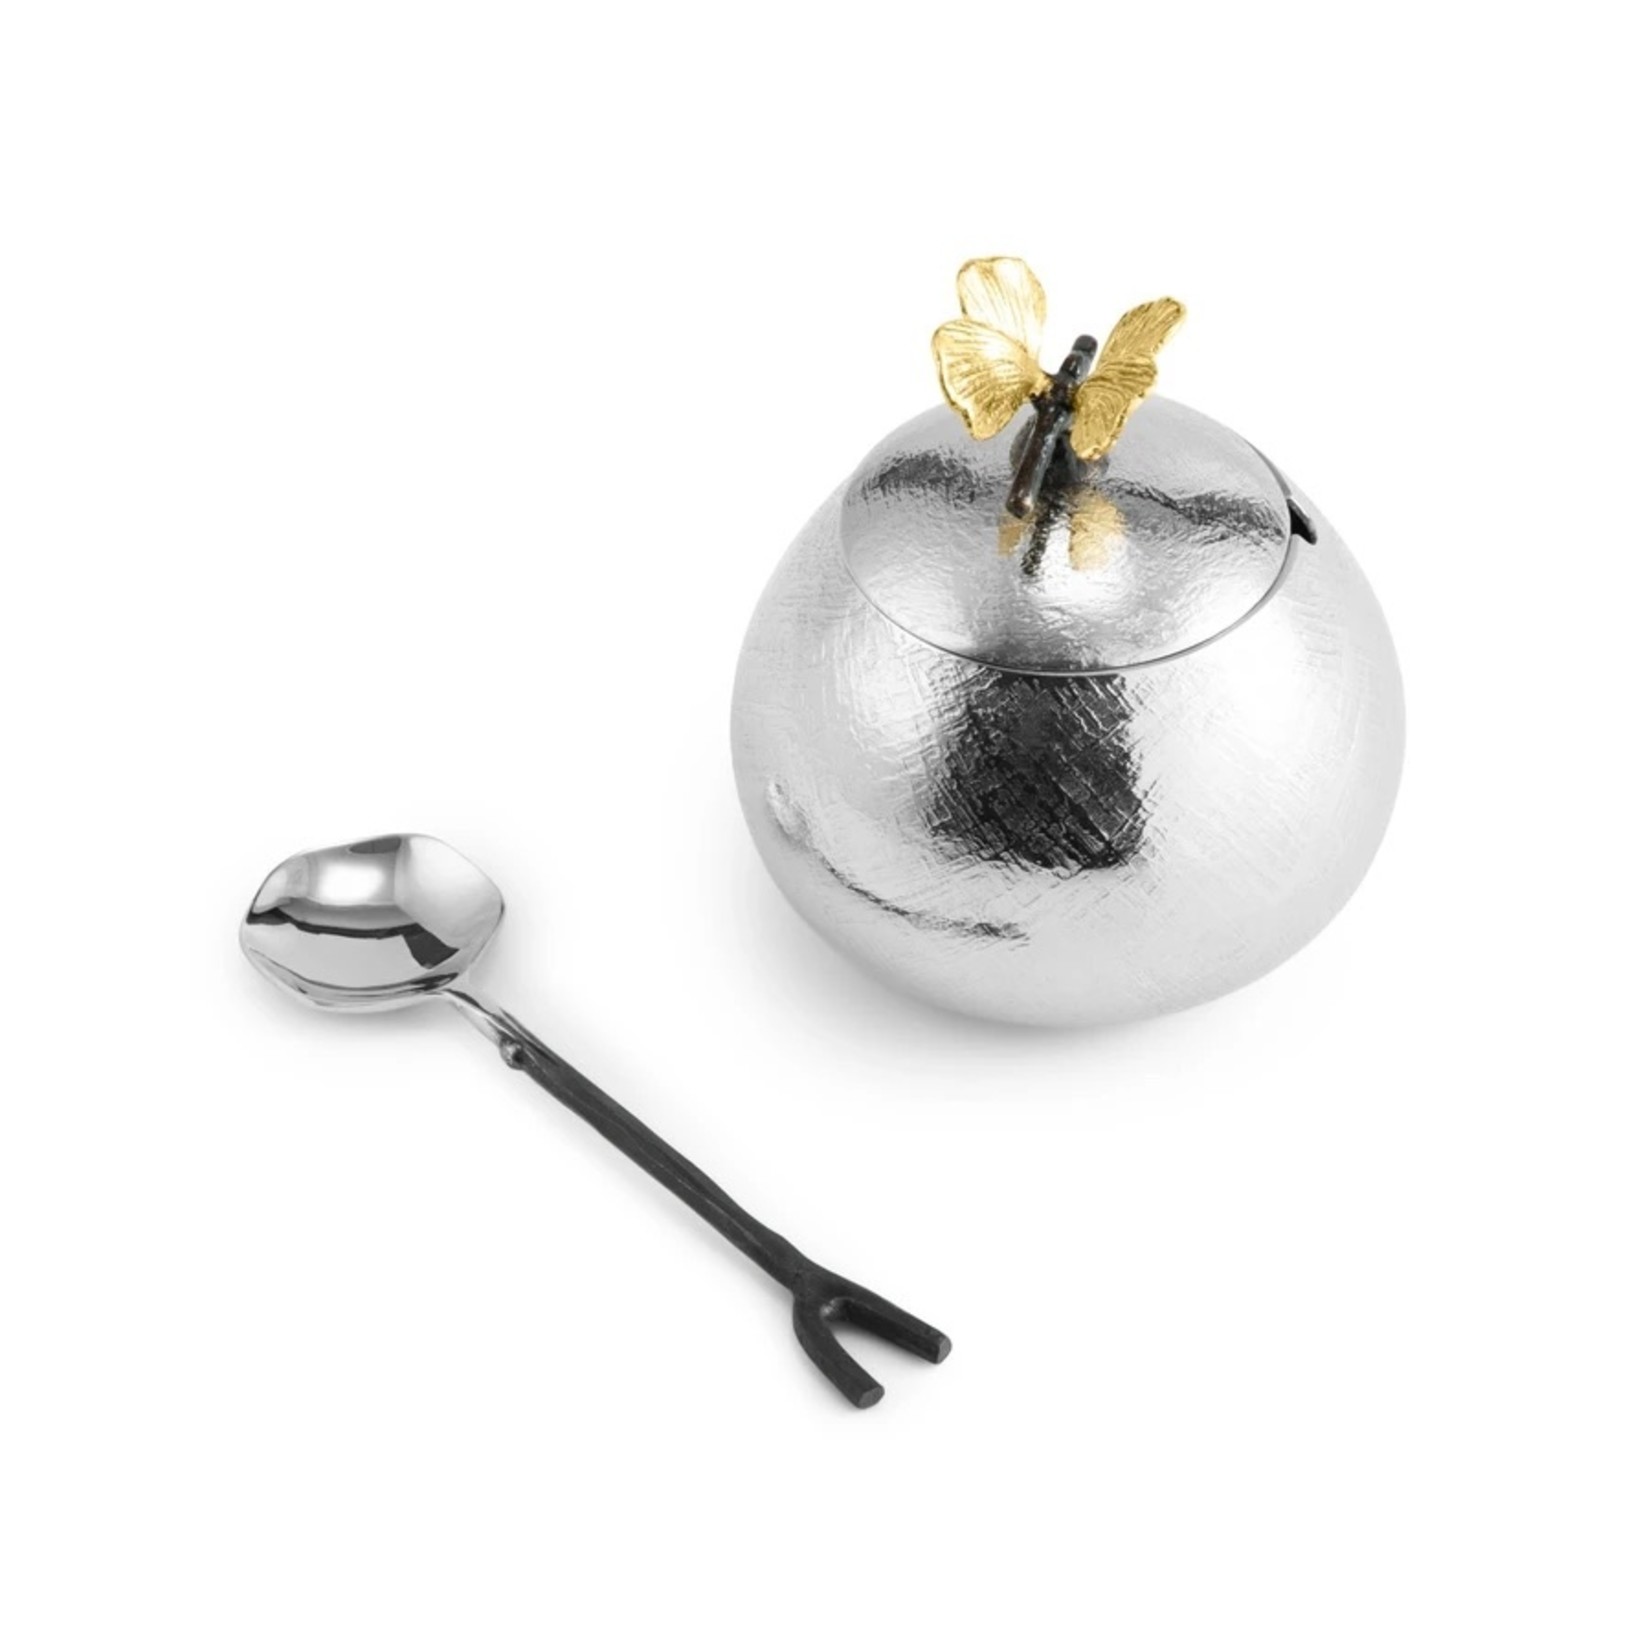 Michael Aram Butterfly Ginkgo pot with Spoon